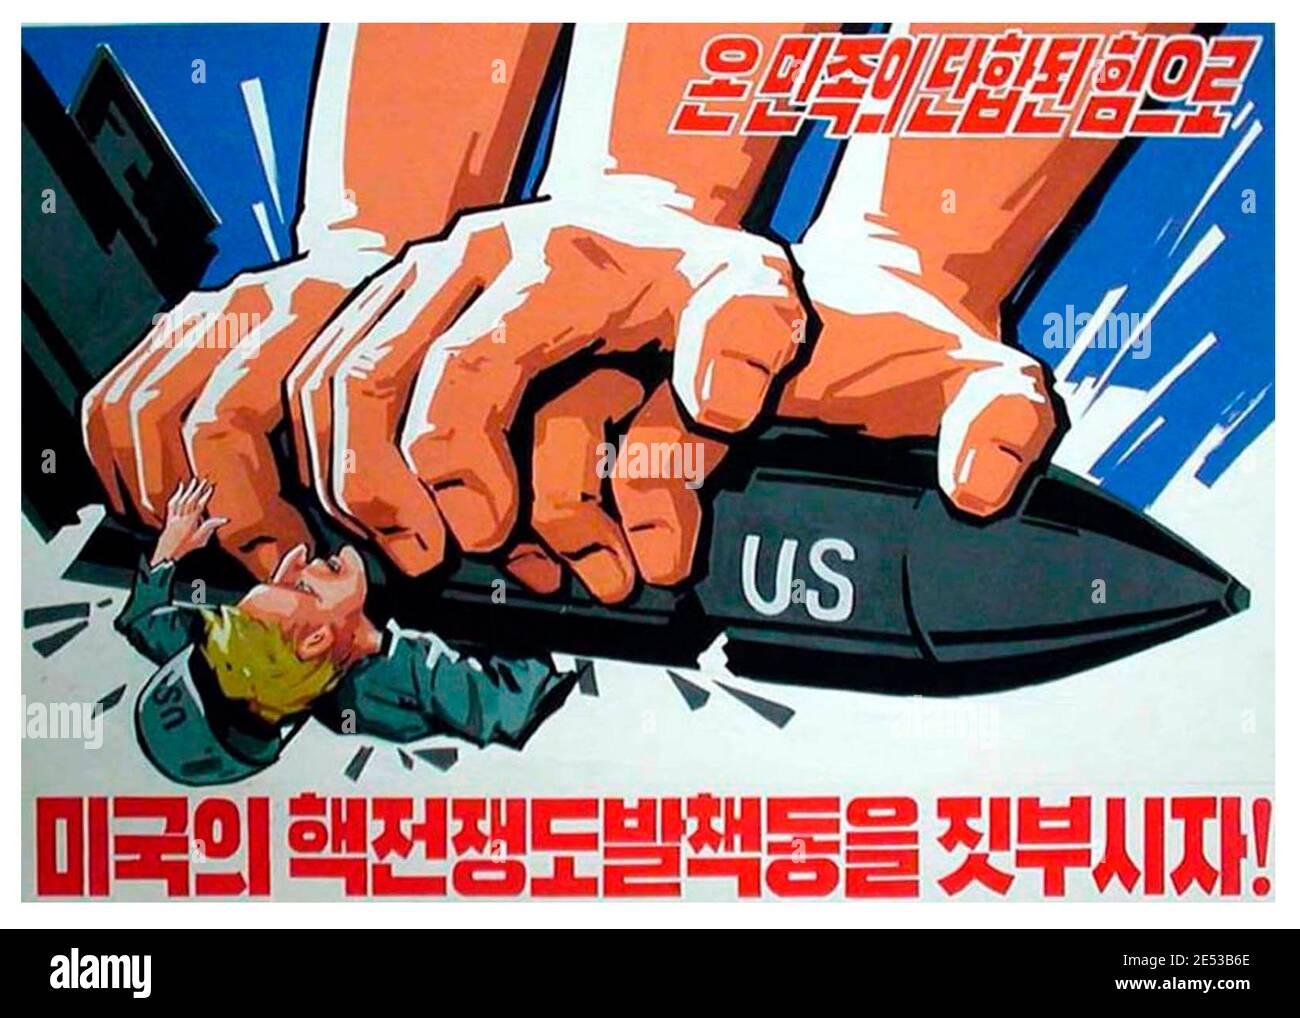 Communist anti-American propaganda. North Korean propaganda poster during Korean War. “Let’s crush the US nuclear war scheme with our whole nation’s u Stock Photo